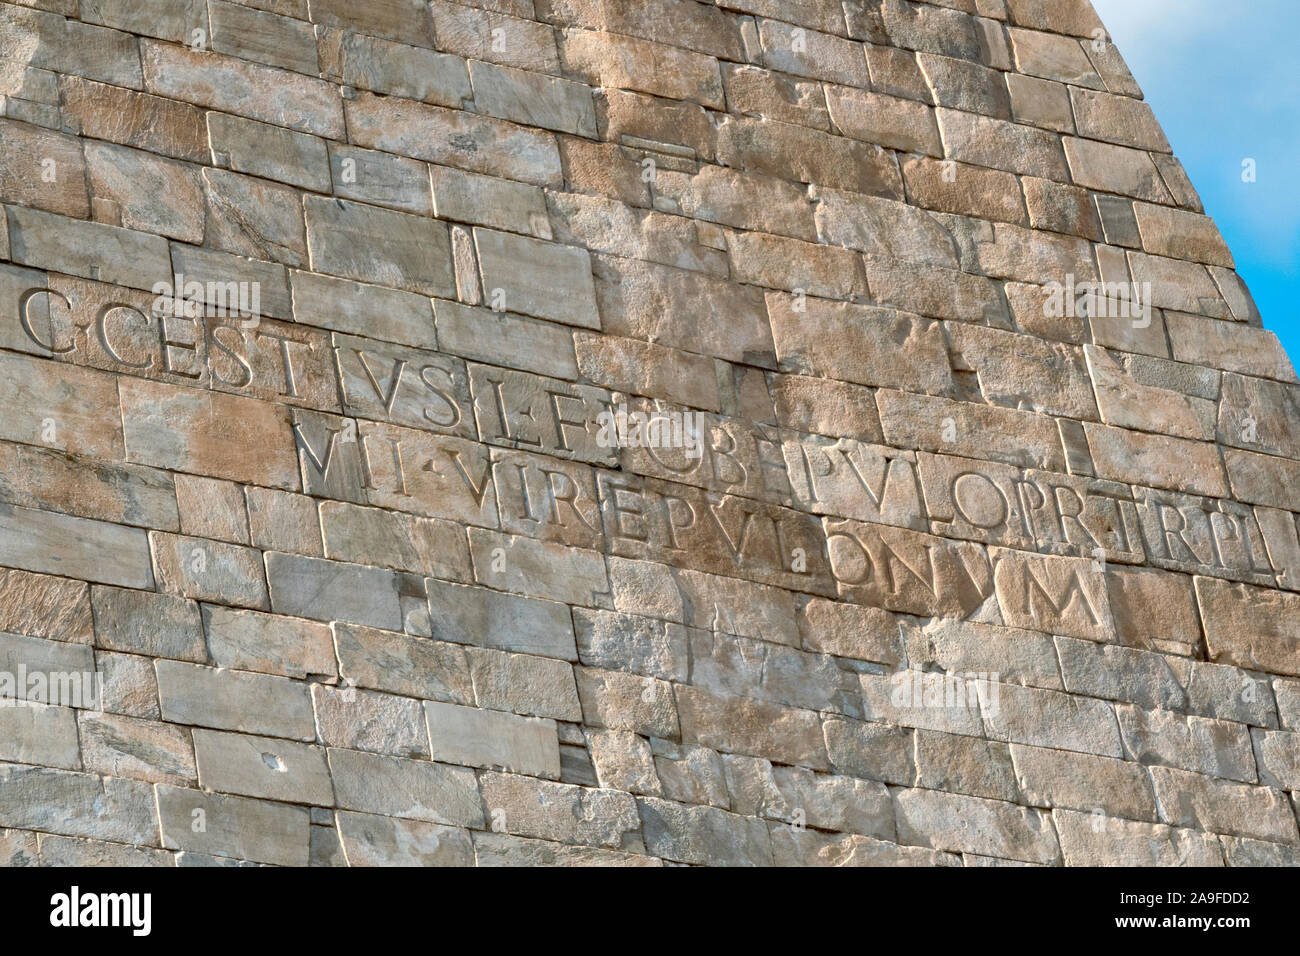 Inscription on the Pyramid of Cestius, Rome, Italy Stock Photo